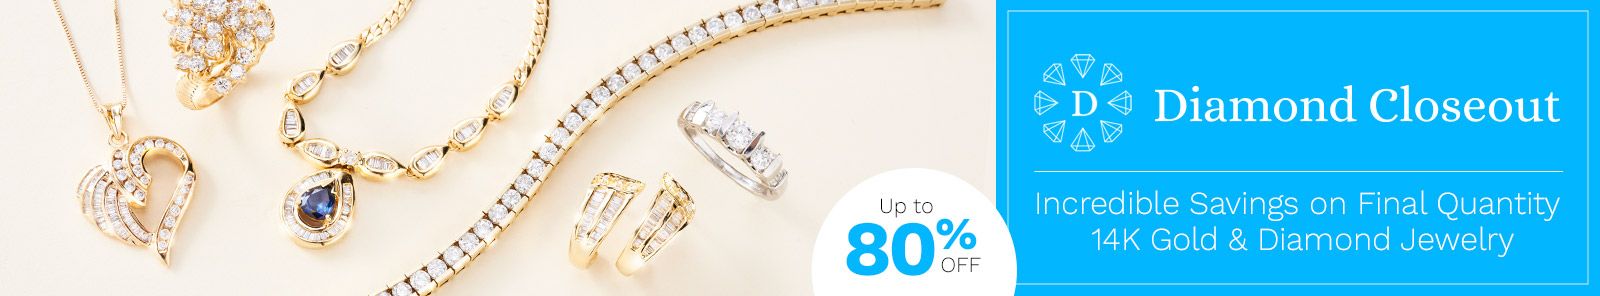 Diamond Closeout |  Incredible Savings on Final Quantity 14K Gold & Diamond Jewelry | 209-198 209-205 209-196 209-203 209-202 209-201